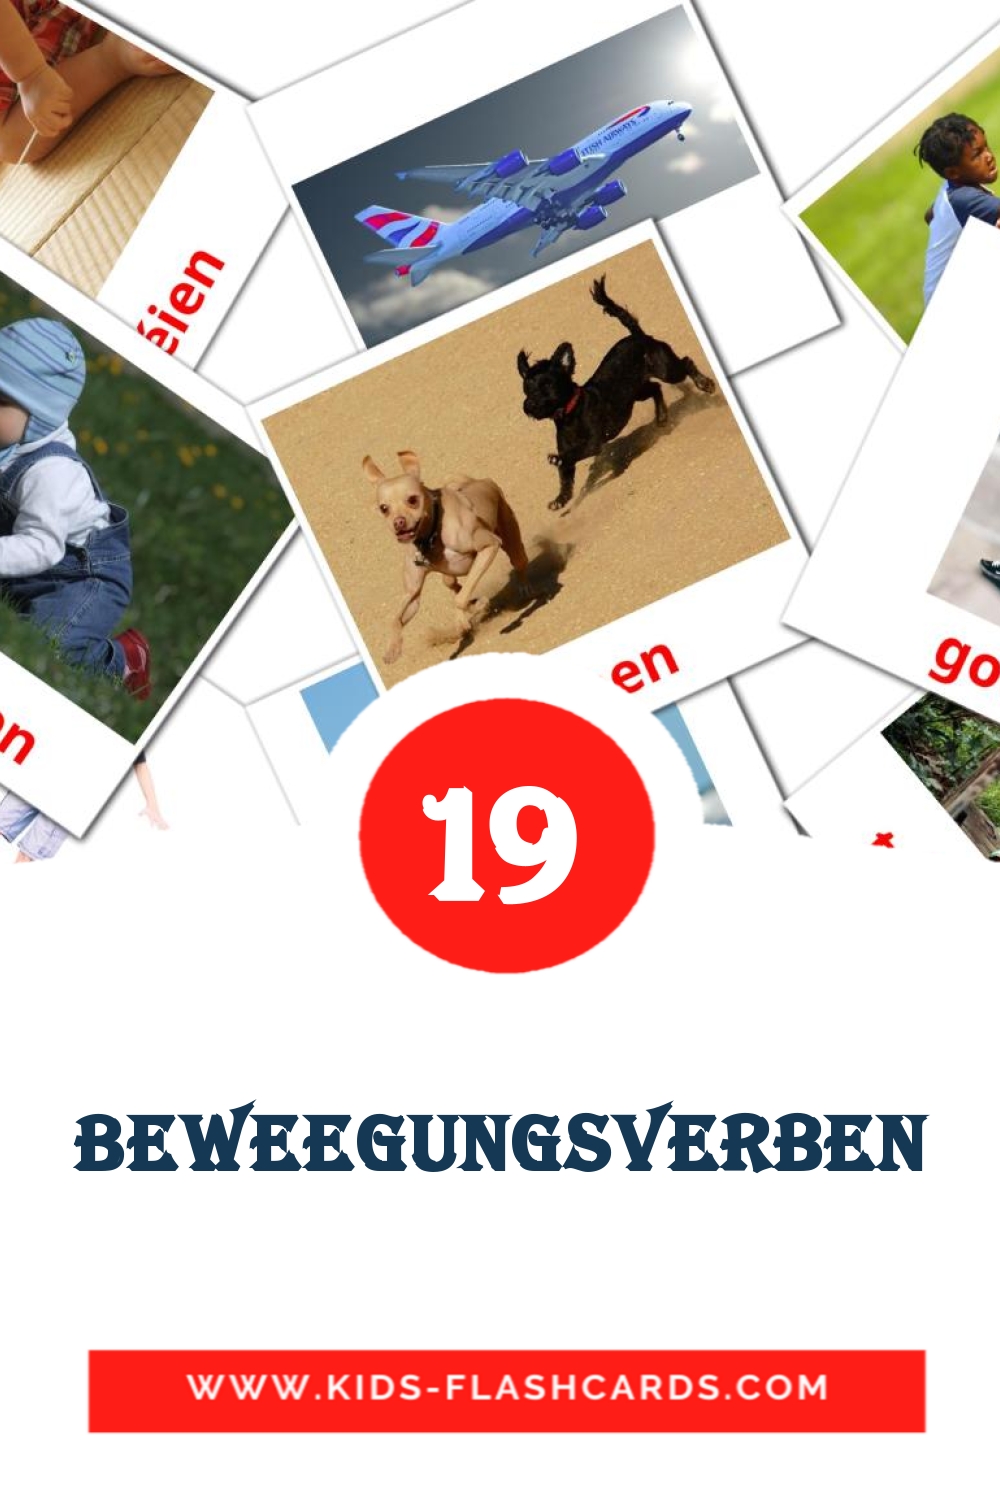 19 Beweegungsverben Picture Cards for Kindergarden in luxembourgish